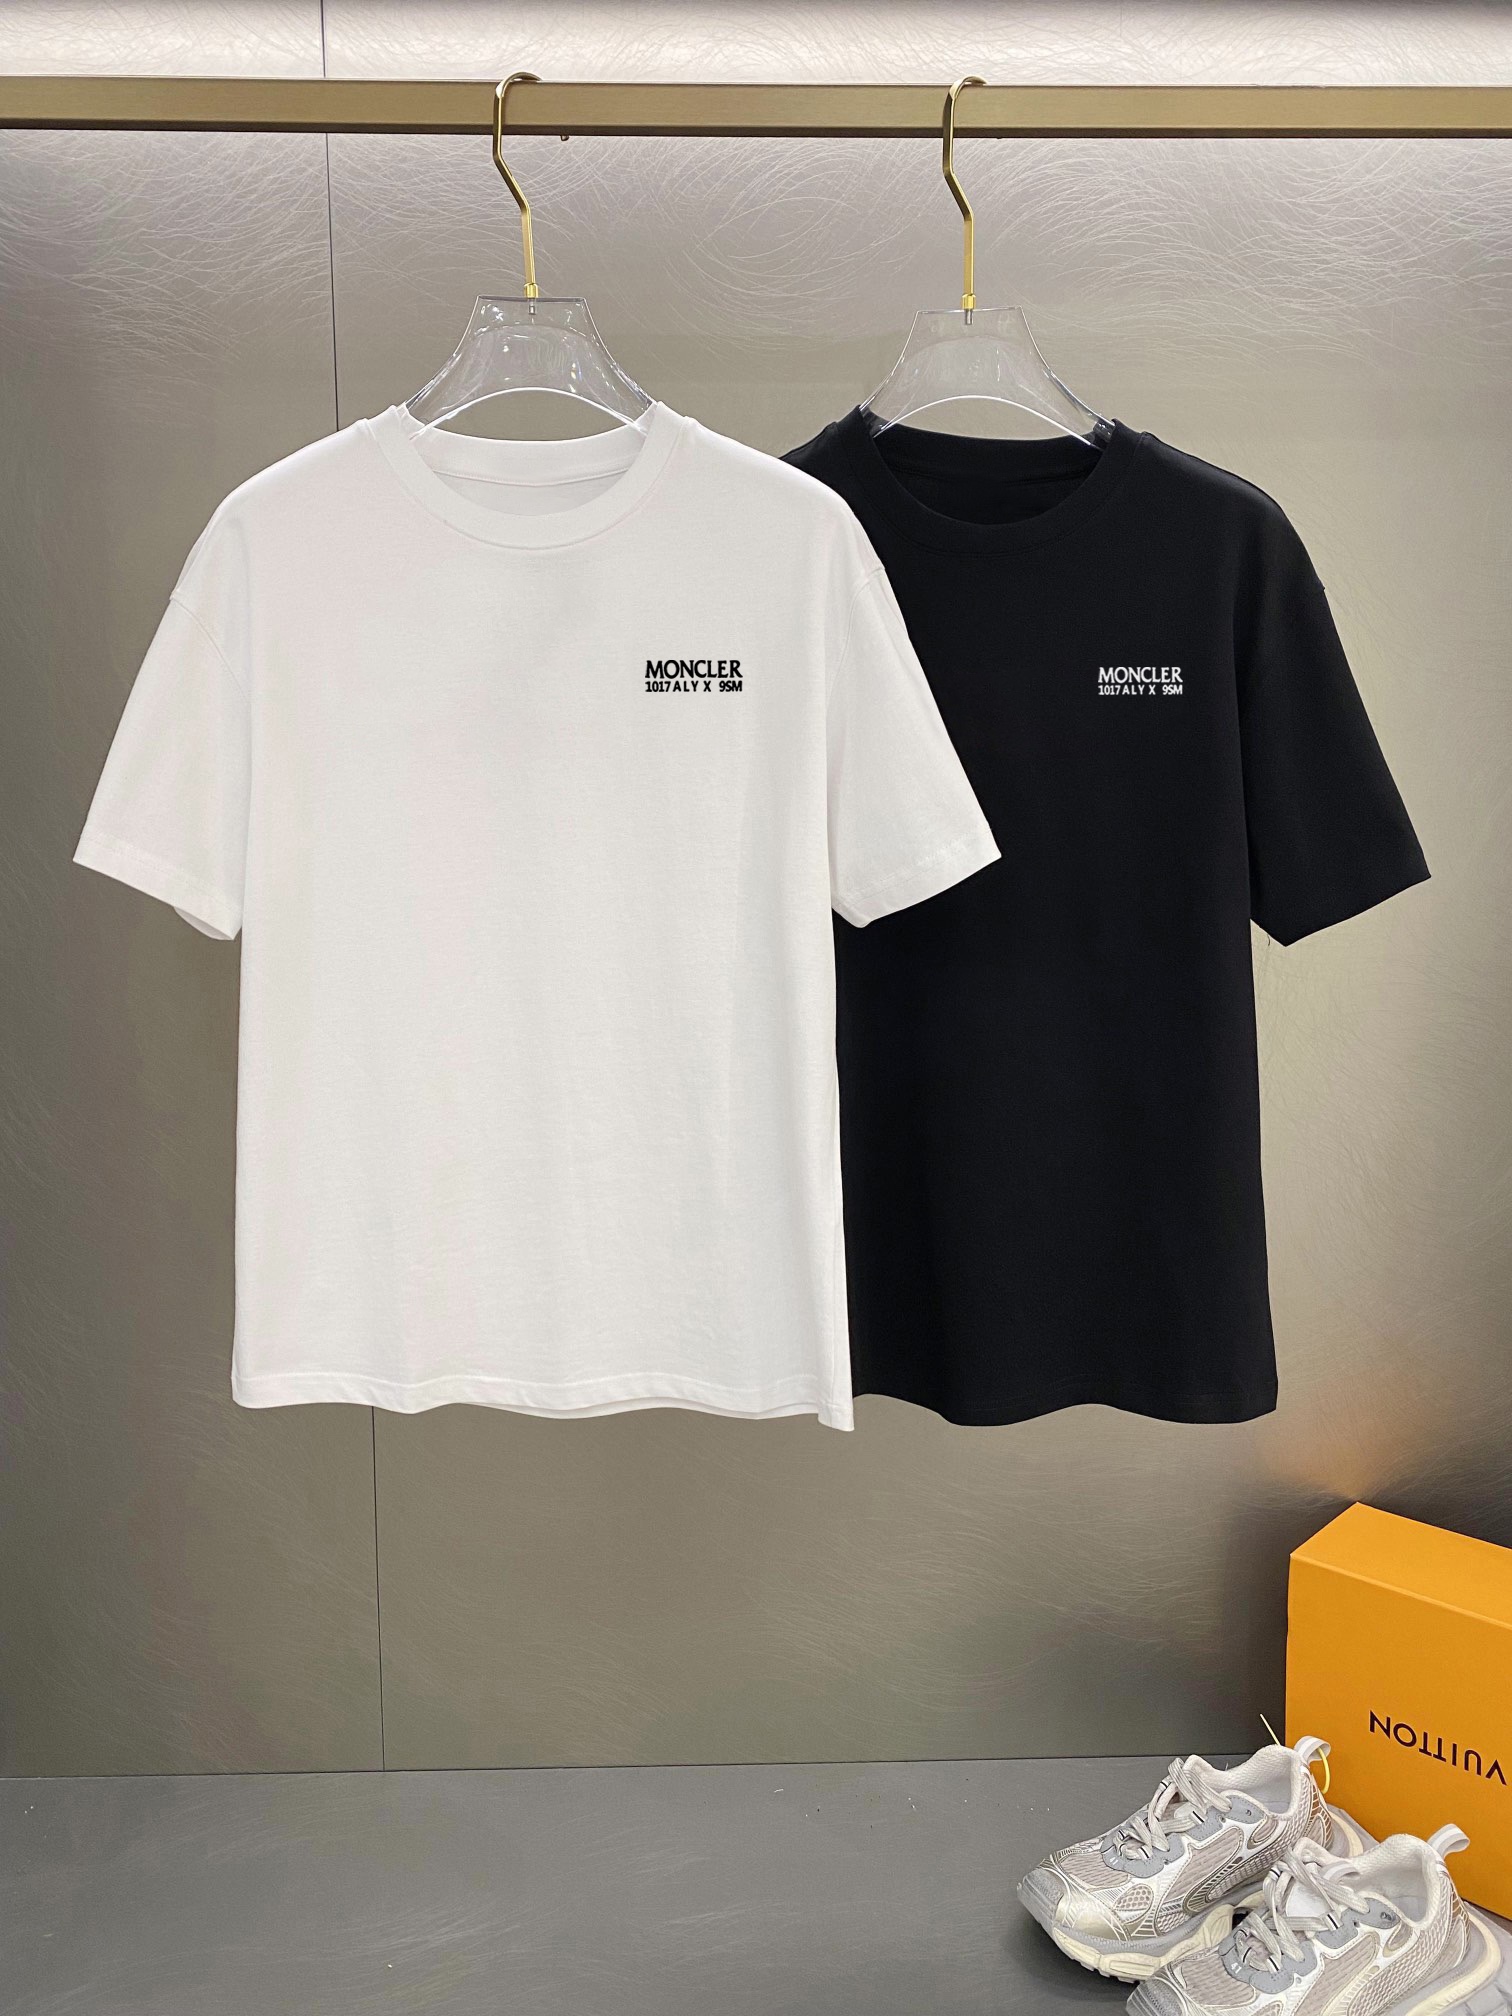 Moncler Clothing T-Shirt Black White Printing Cotton Short Sleeve